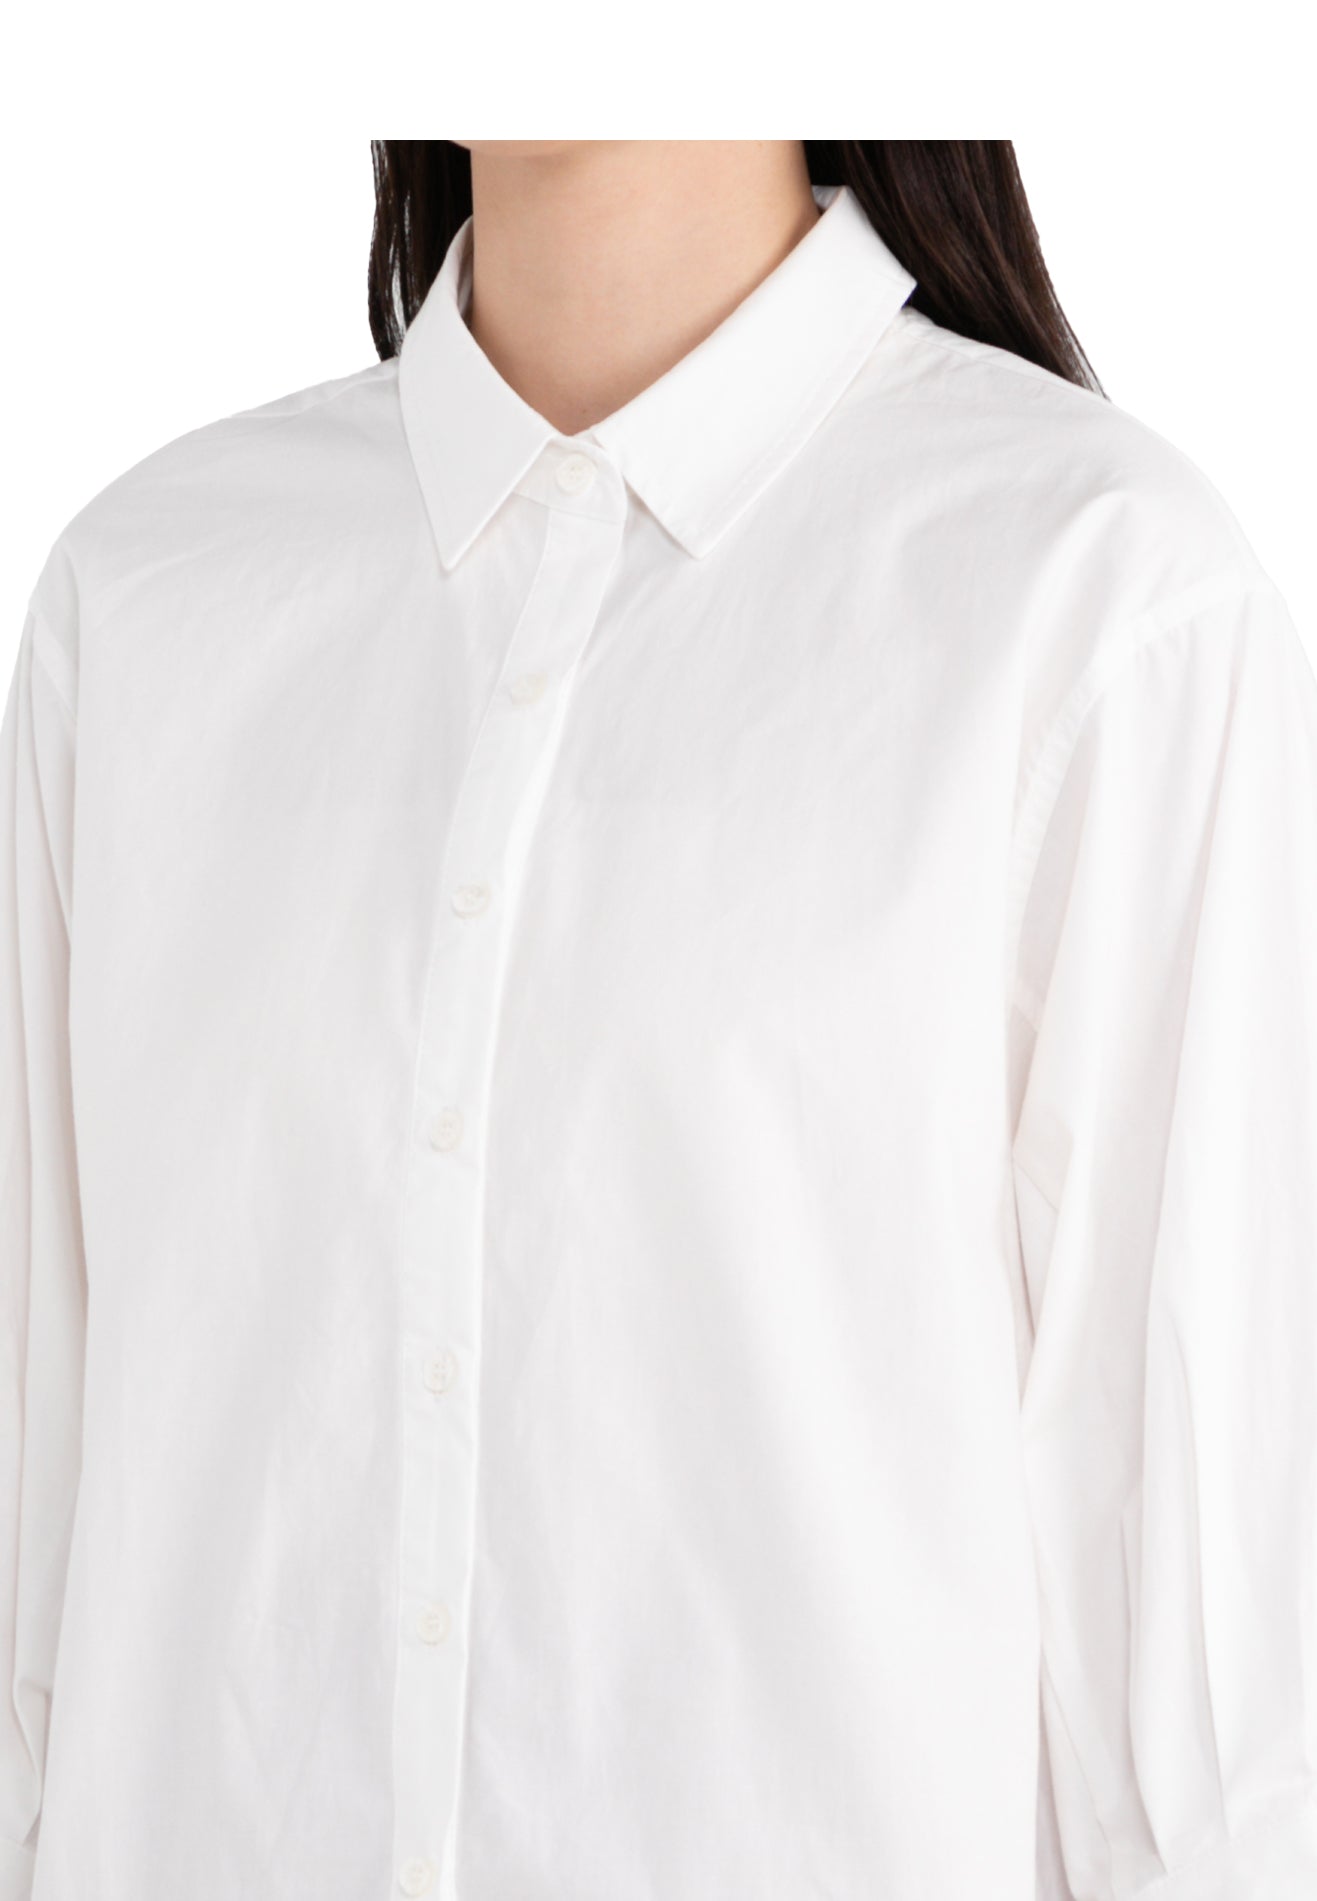 ELLE Apparel Plain Collar Half Length Sleeves Top